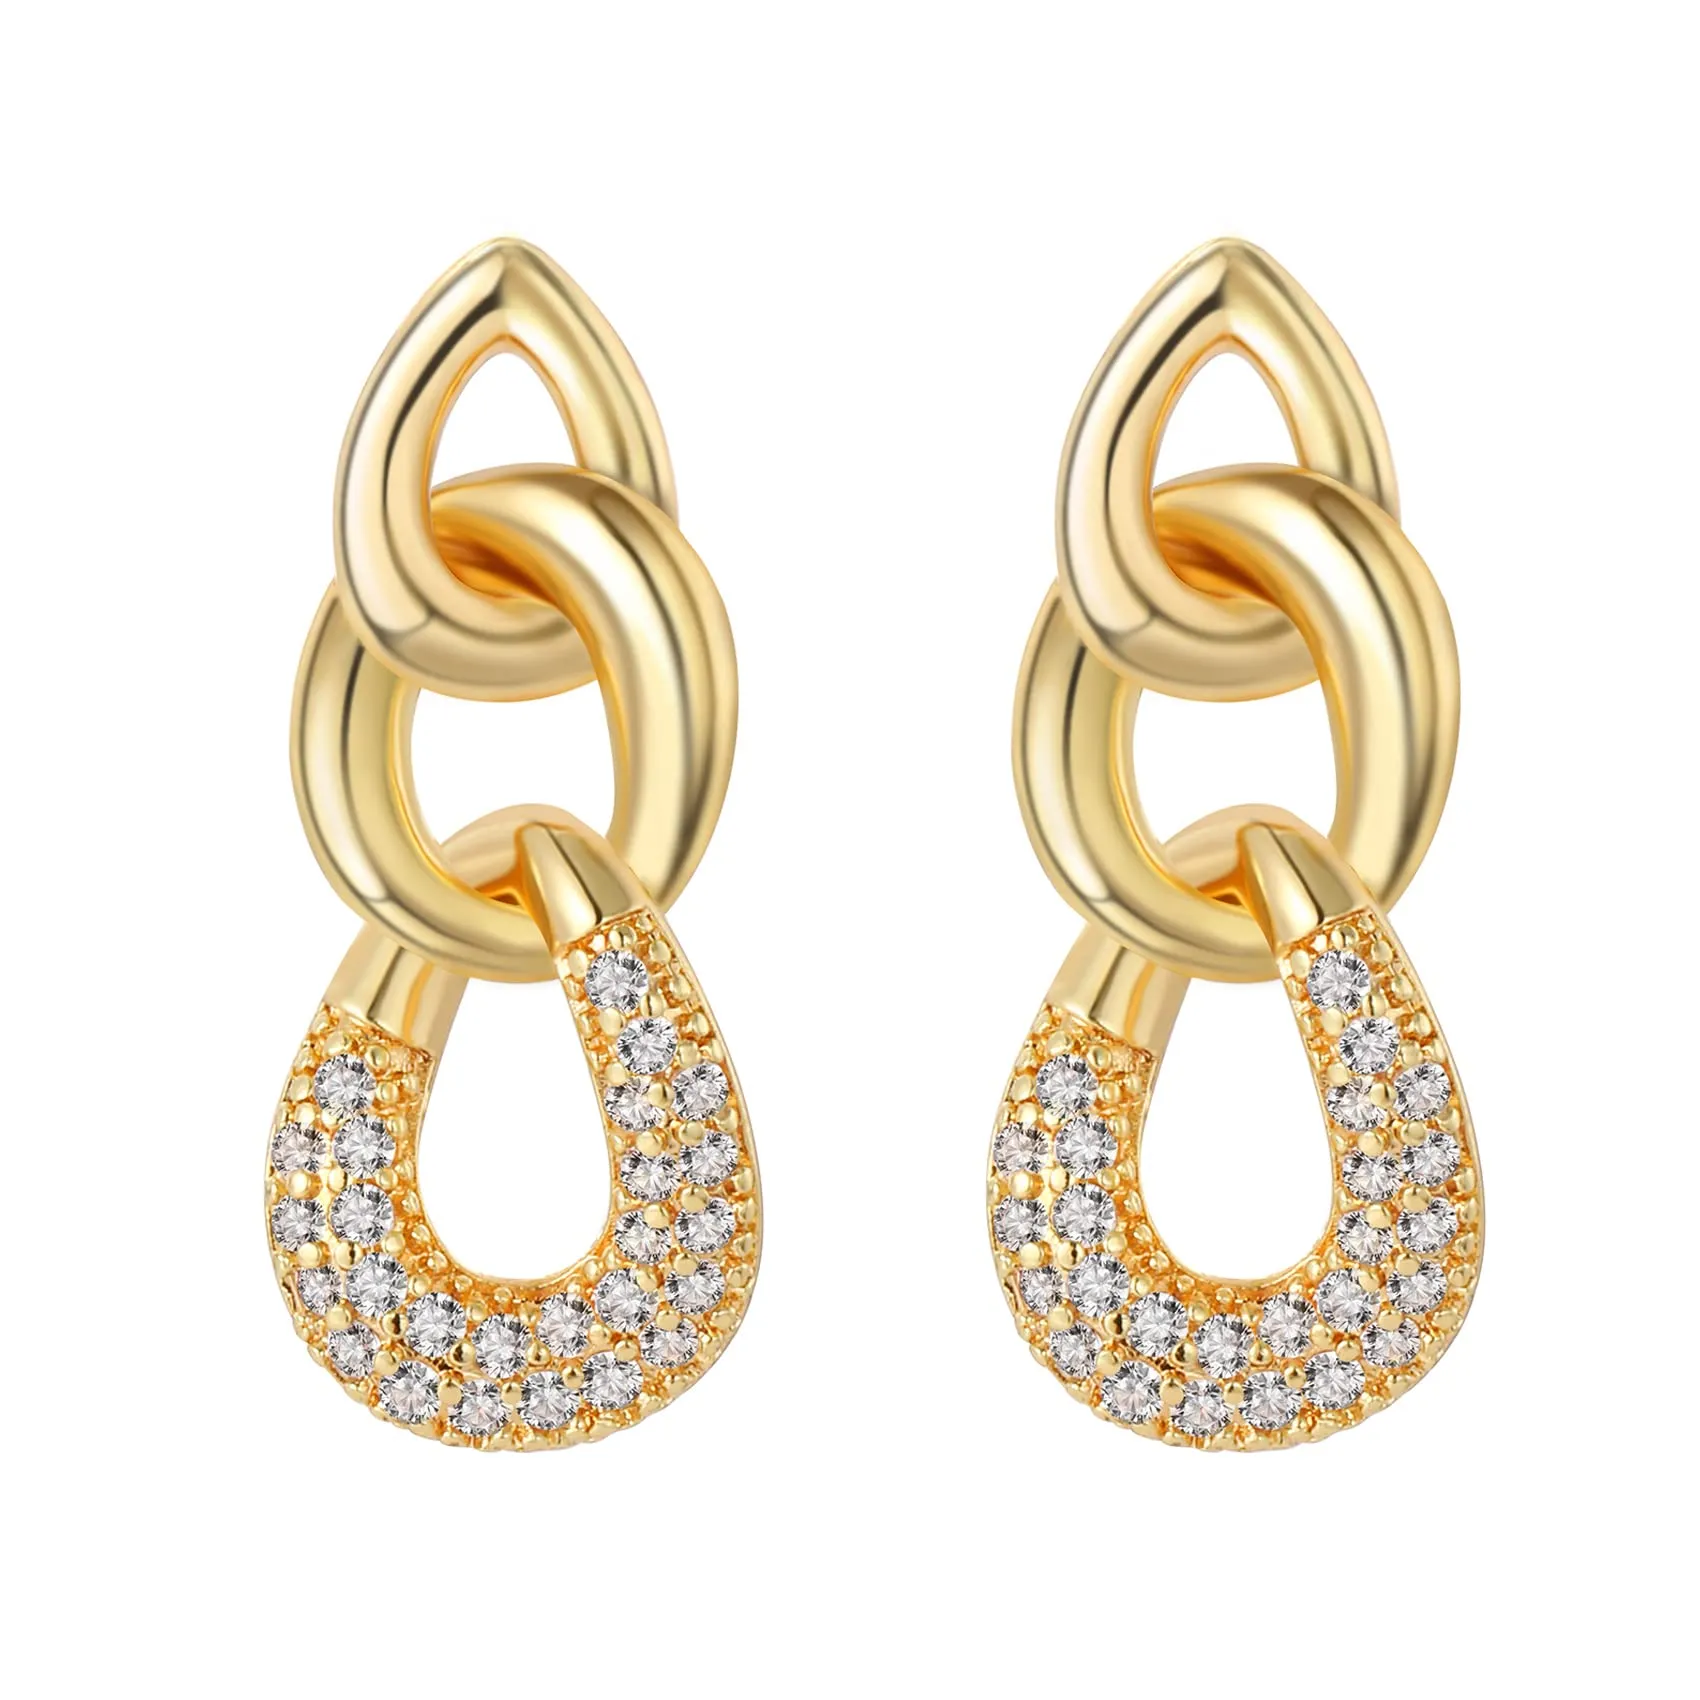 Charm Link Chain Earrings Small Gold Hoop Zircon Dangle Long Geometric Drop F ampda